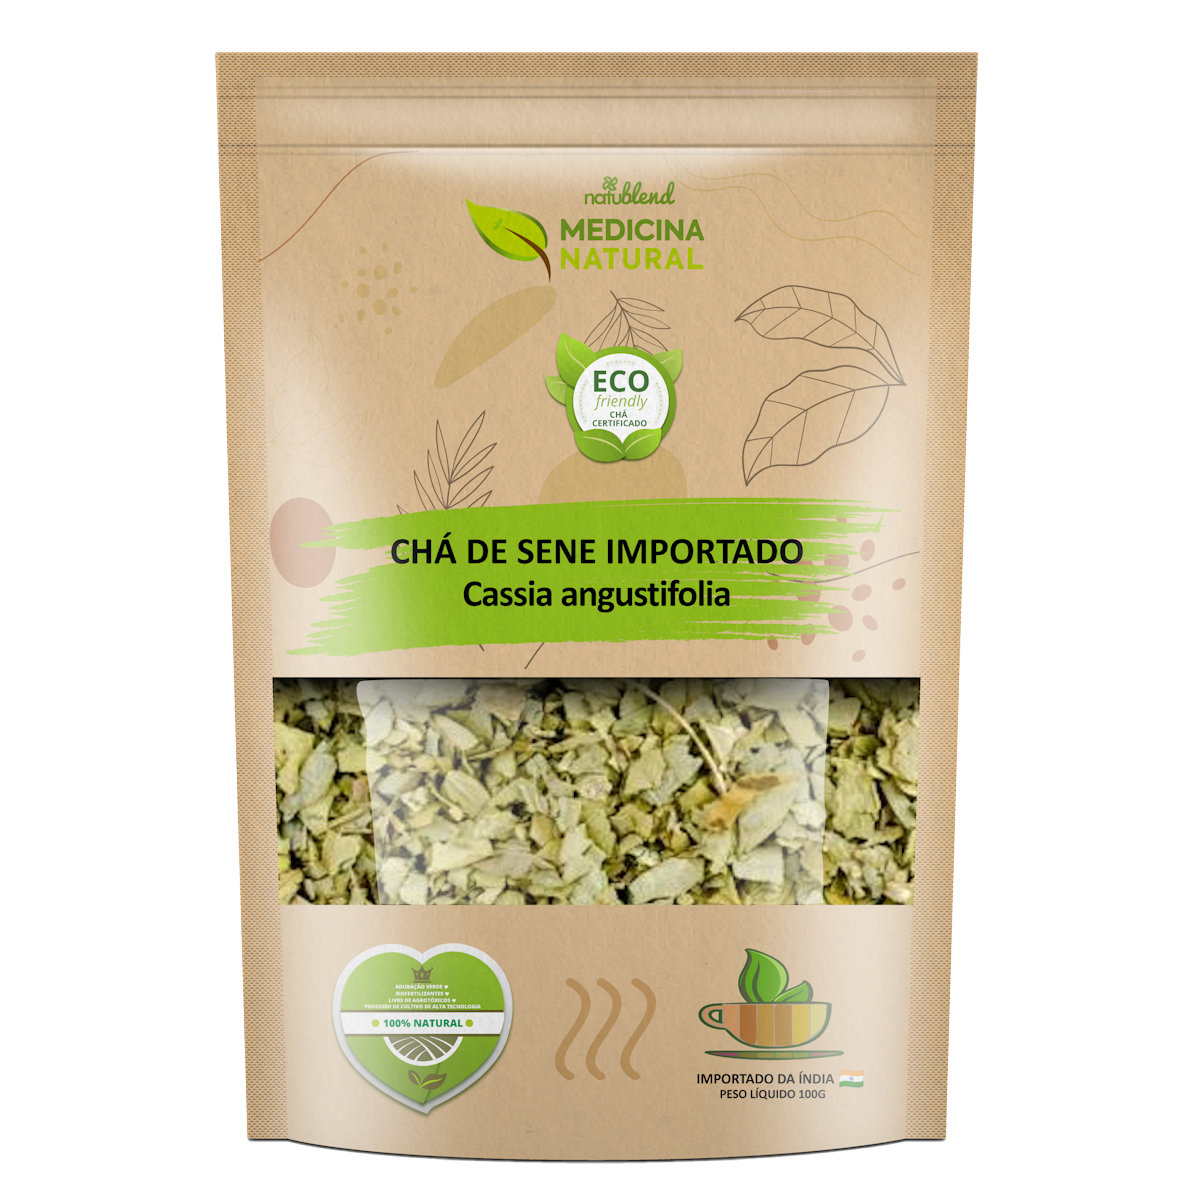 Chá de Sene - Cassia angustifolia - Medicina Natural